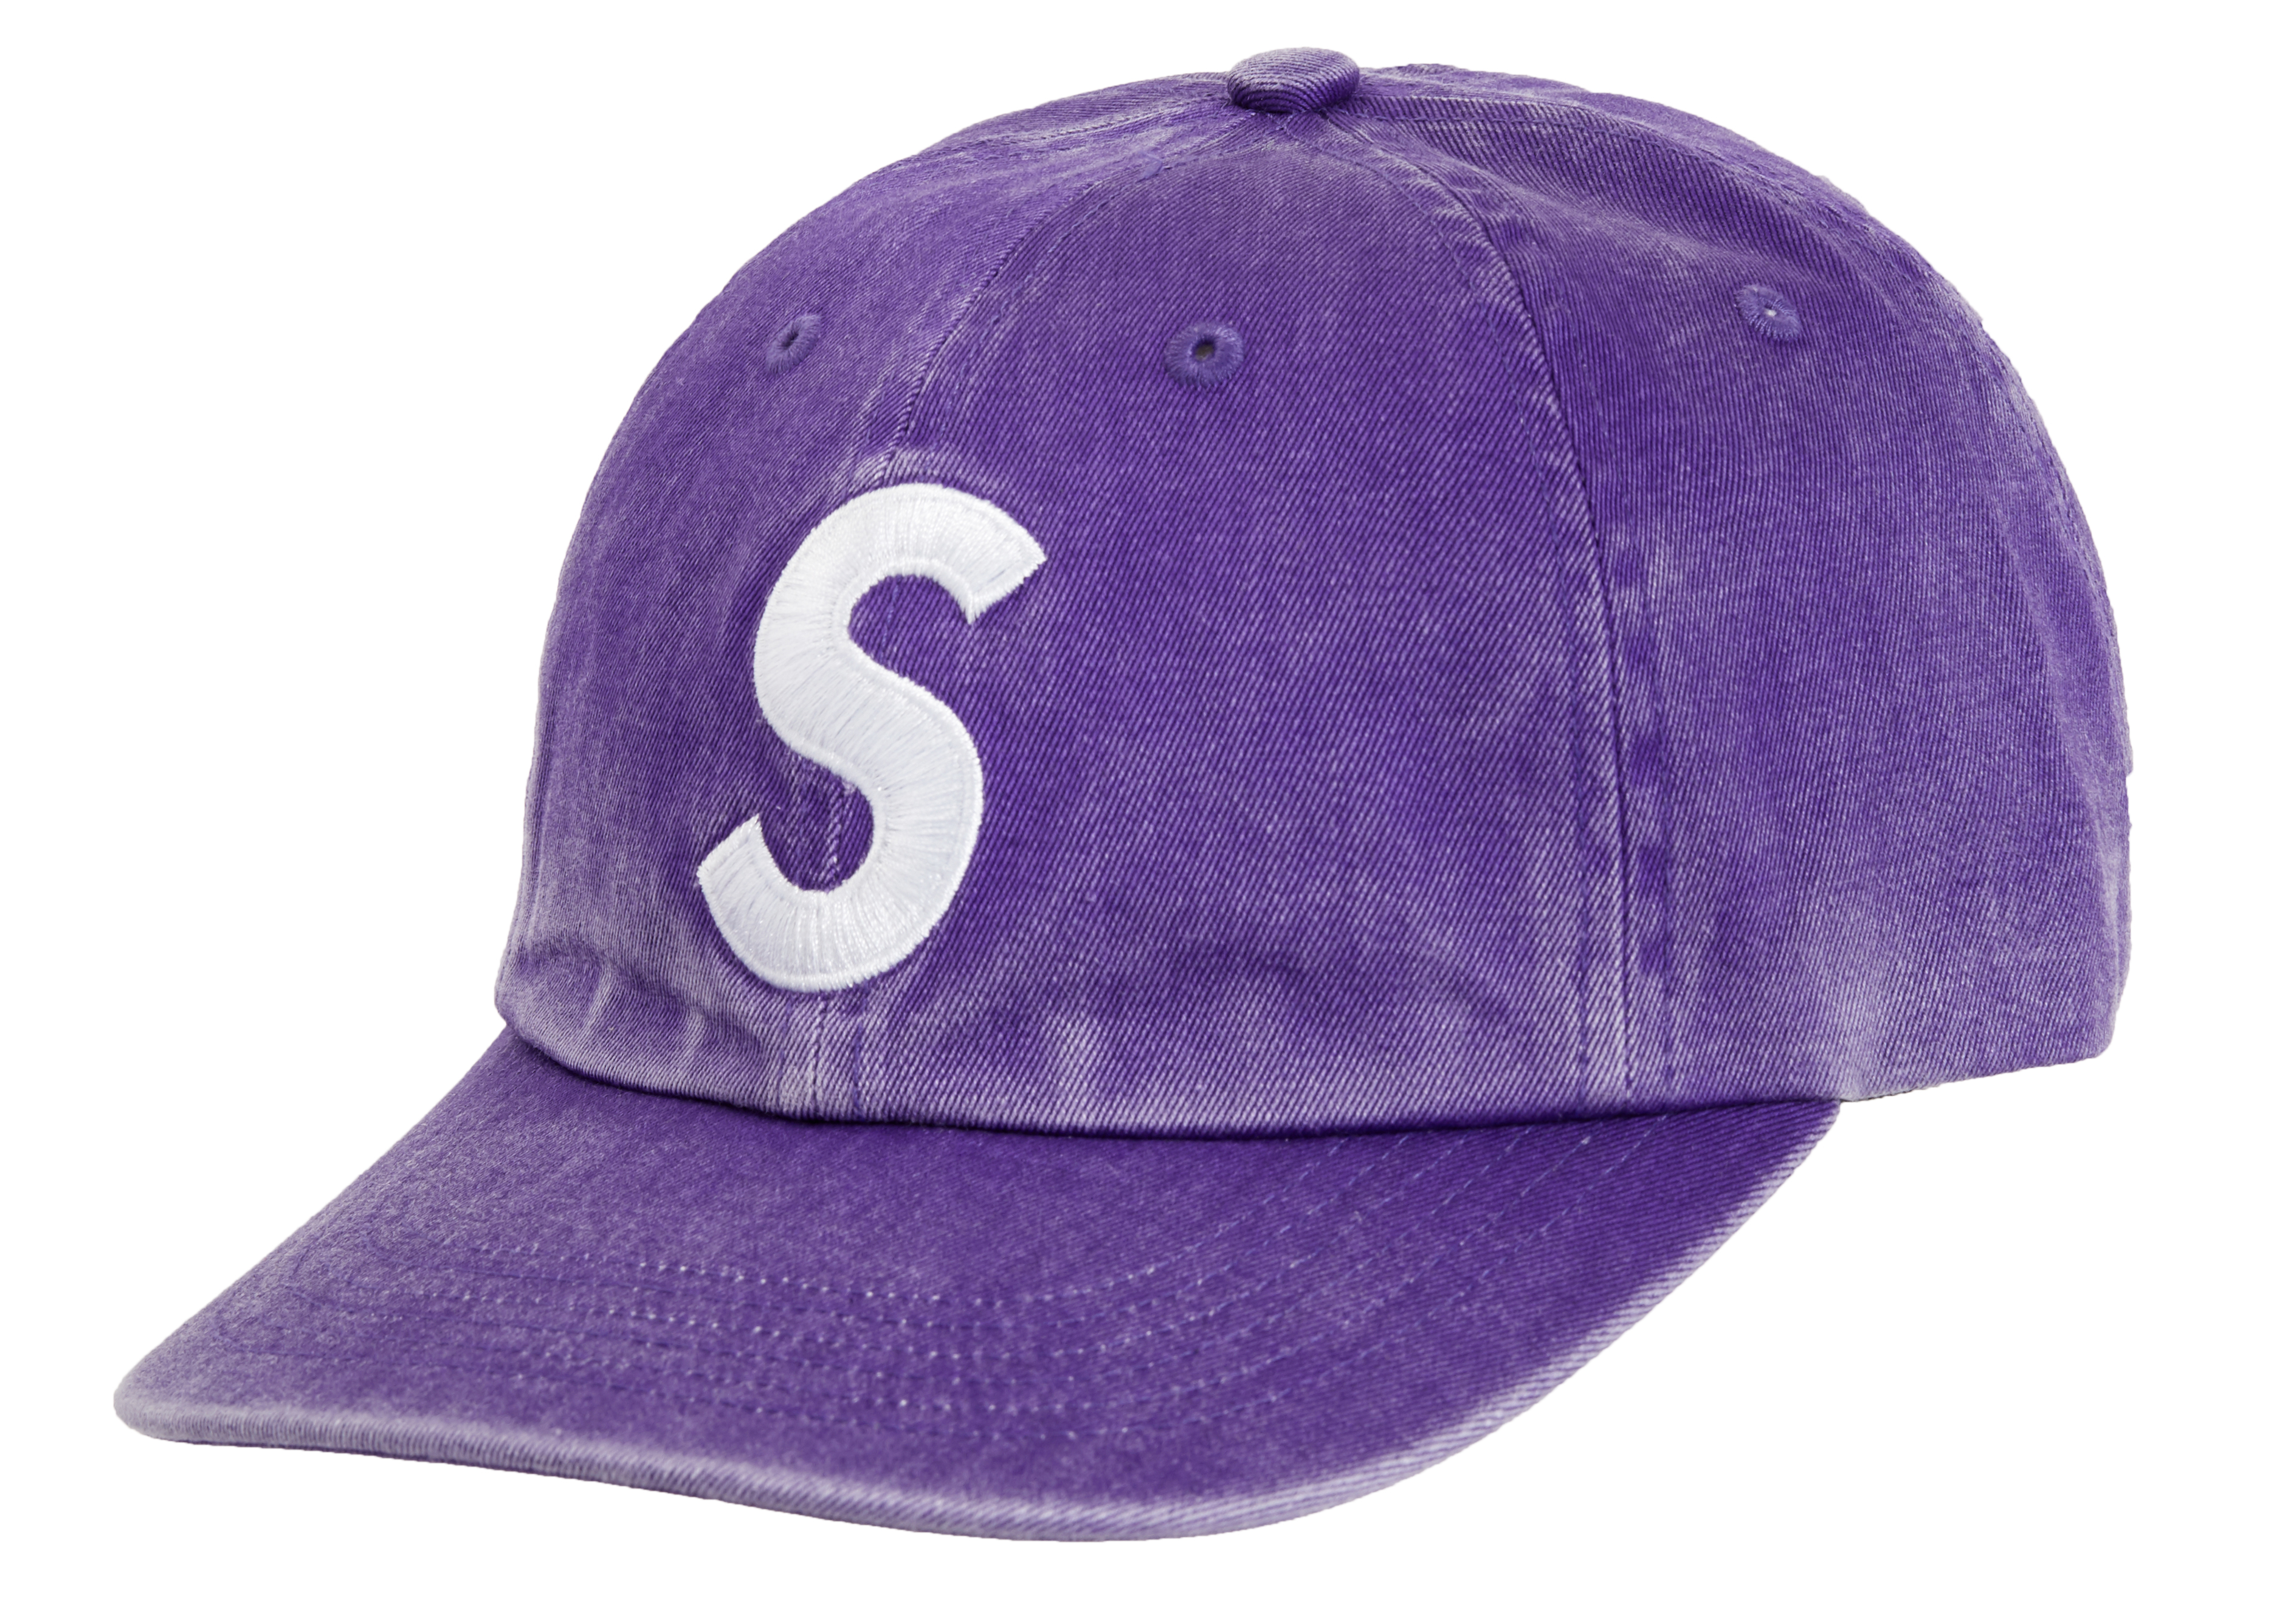 Supreme Pigment Print S Logo 6-Panel Purple